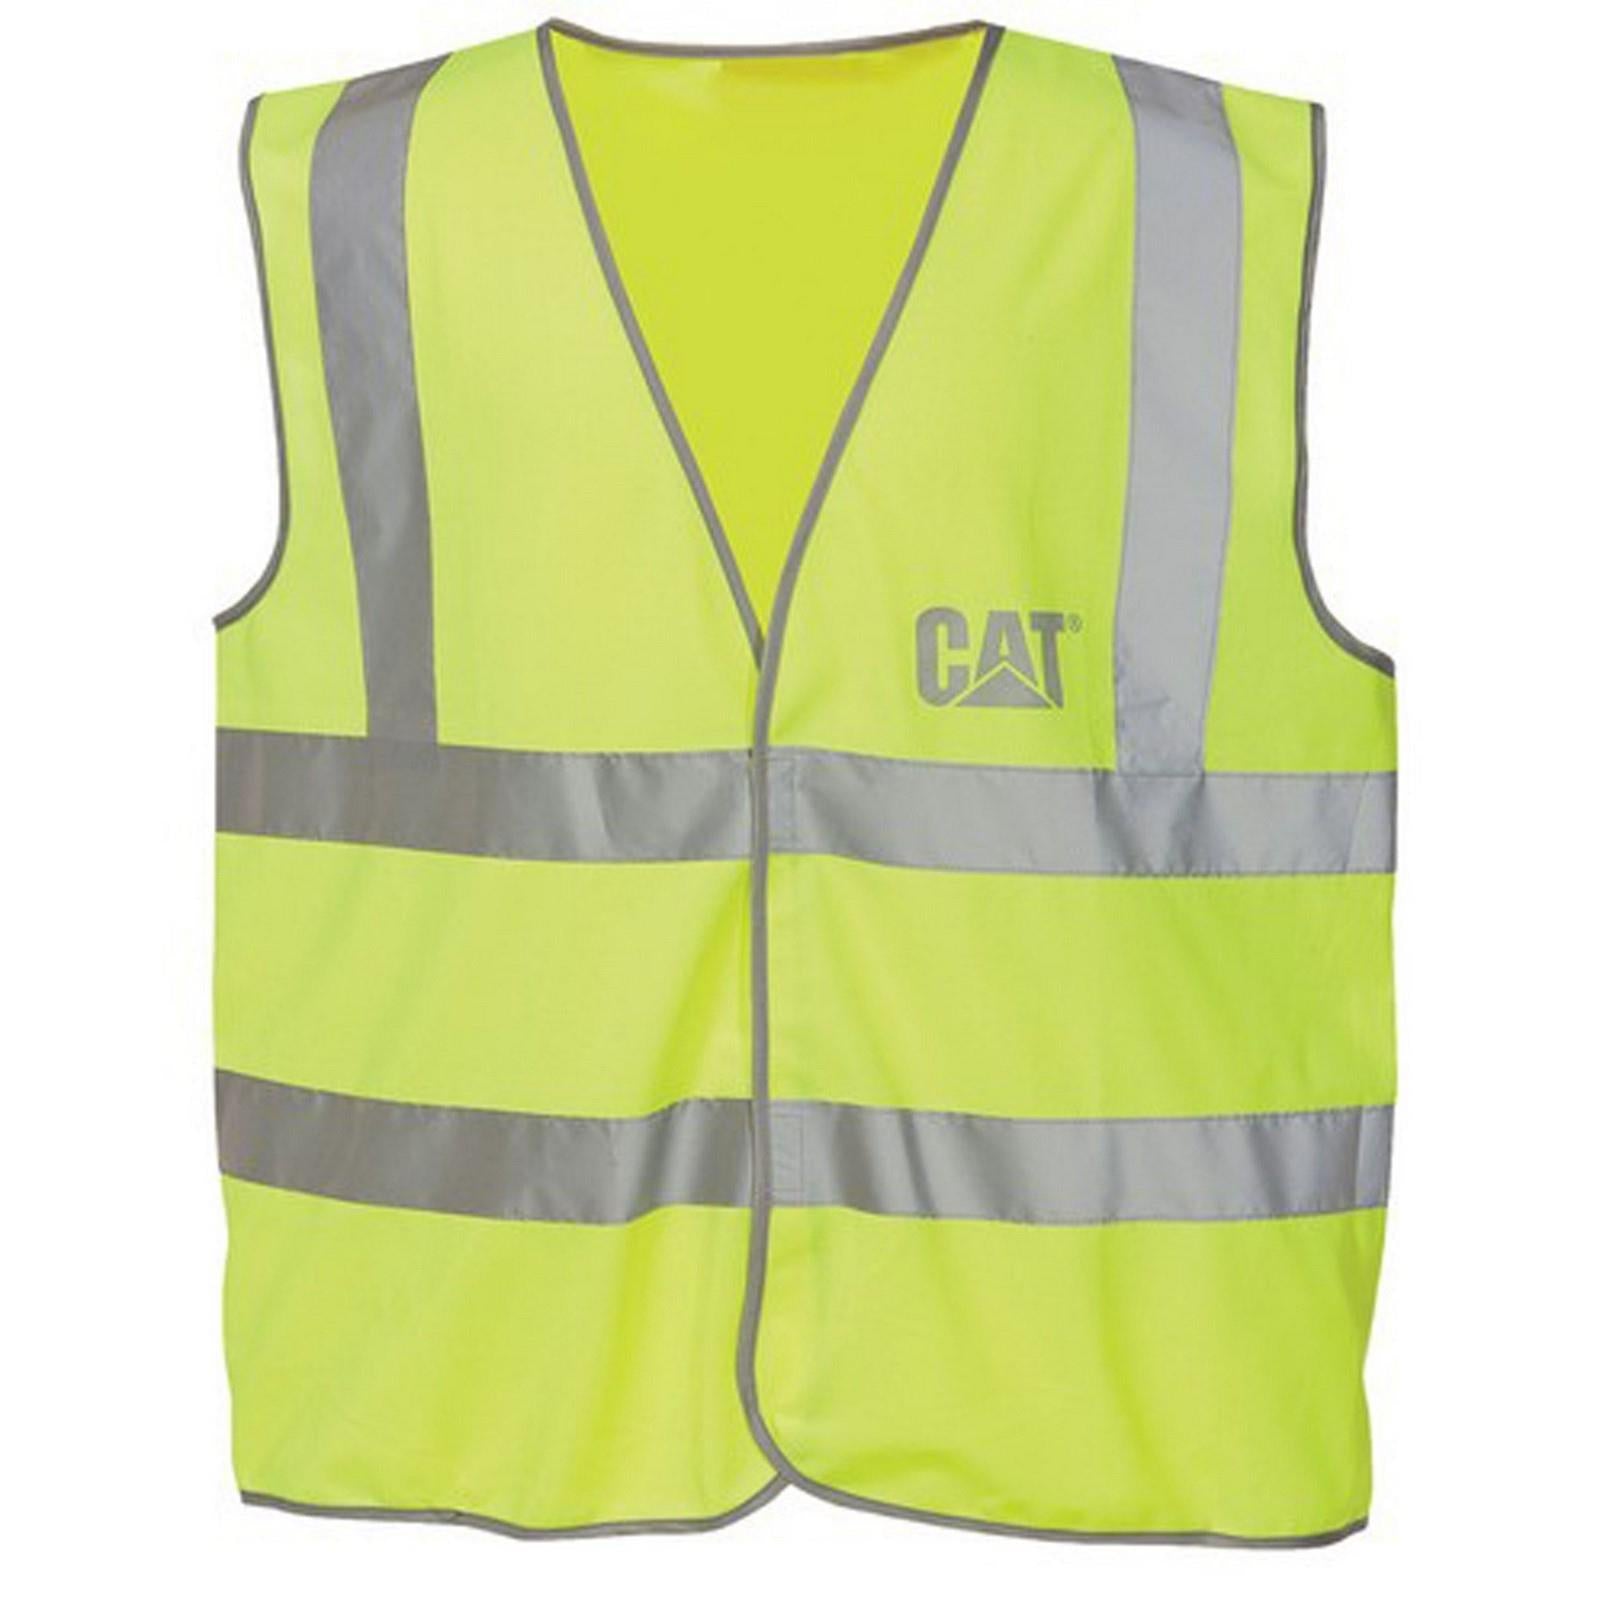 Caterpillar CAT 1322024 printed logo high visibility yellow waistcoat vest